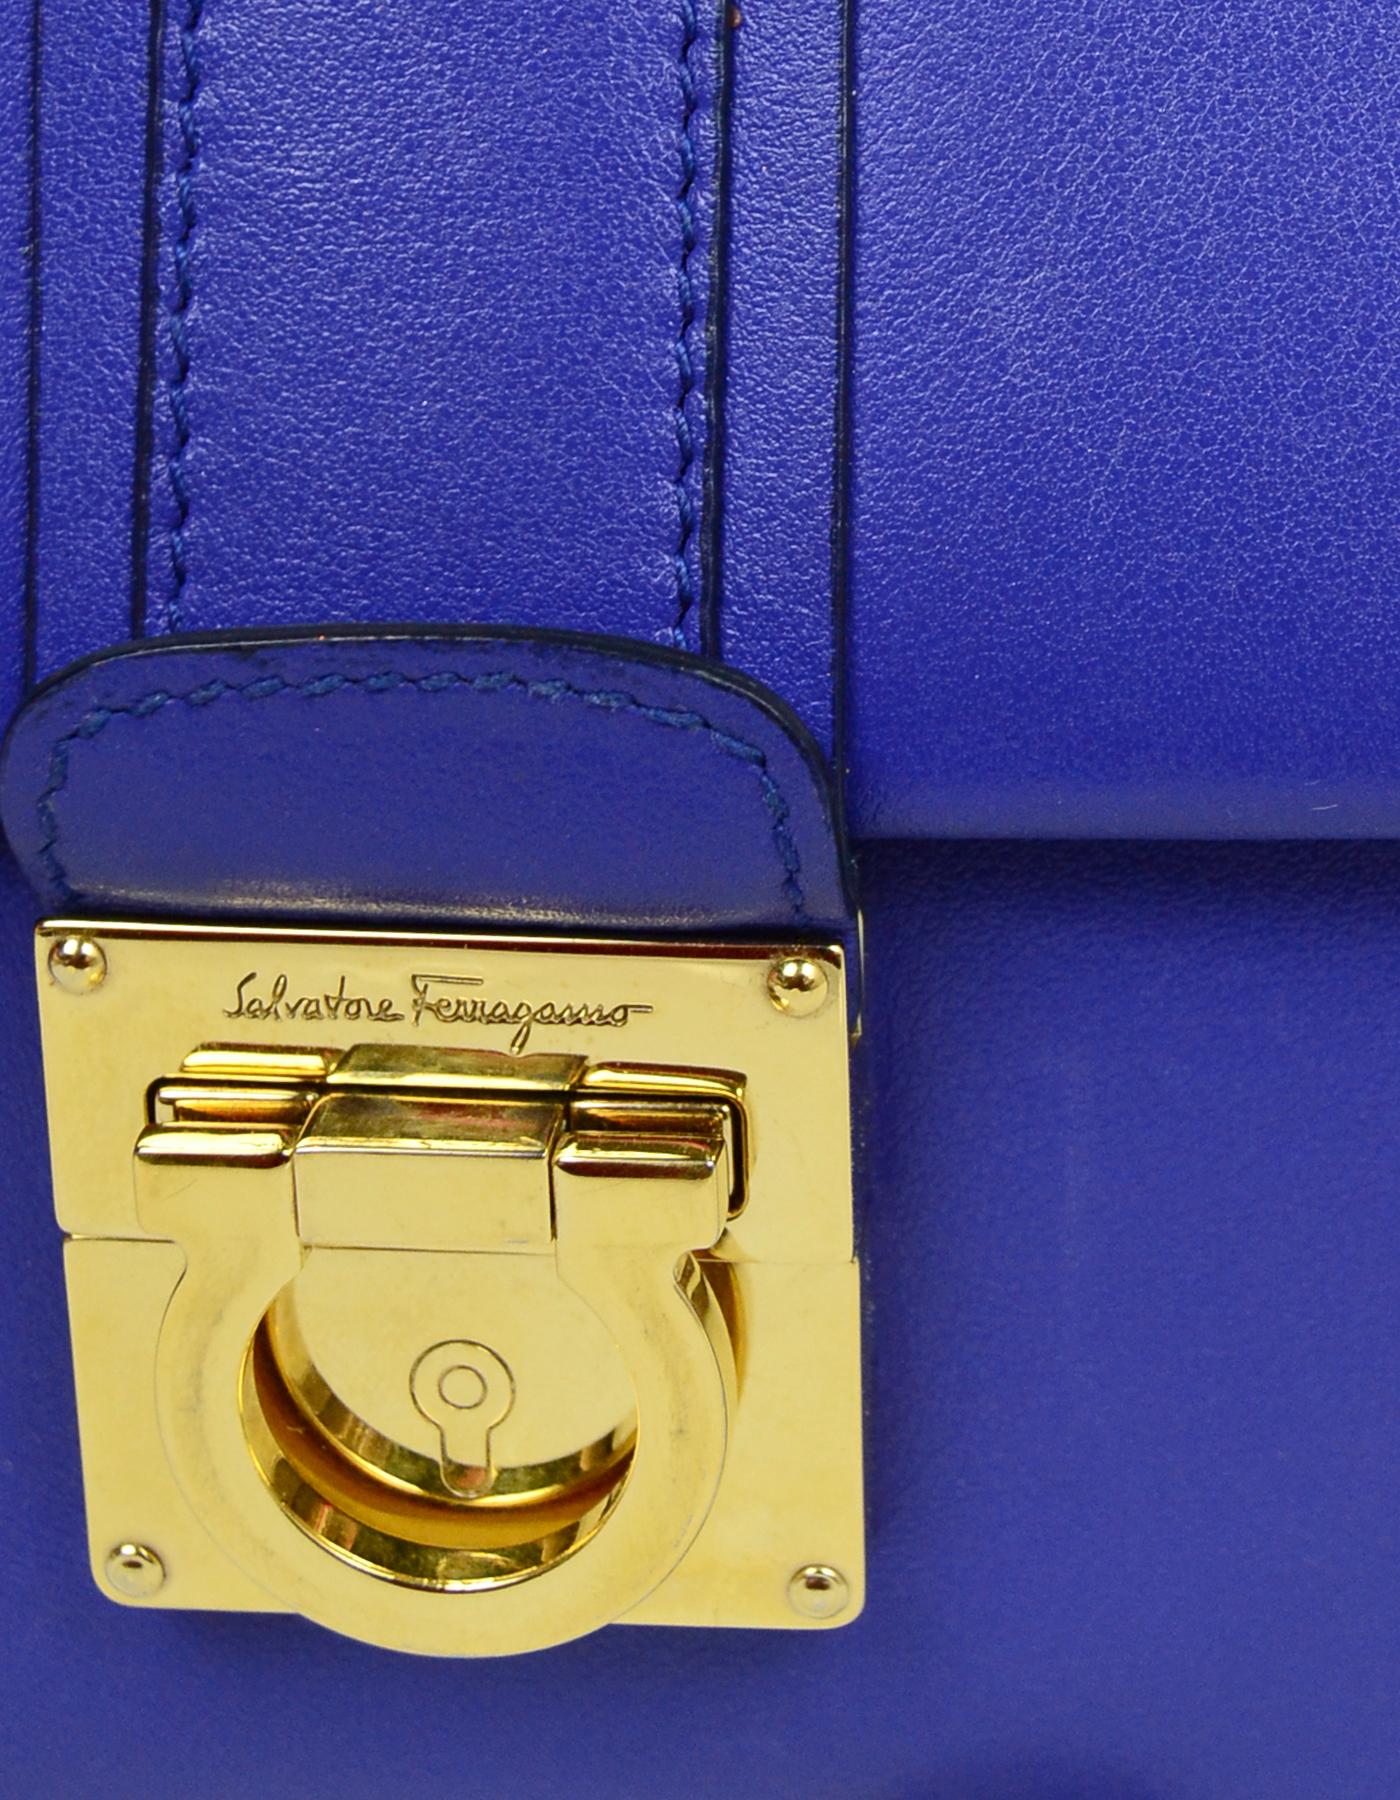 Salvatore Ferragamo Royal Blue Leather Gancini Flap Bag w/ Chain Strap 4